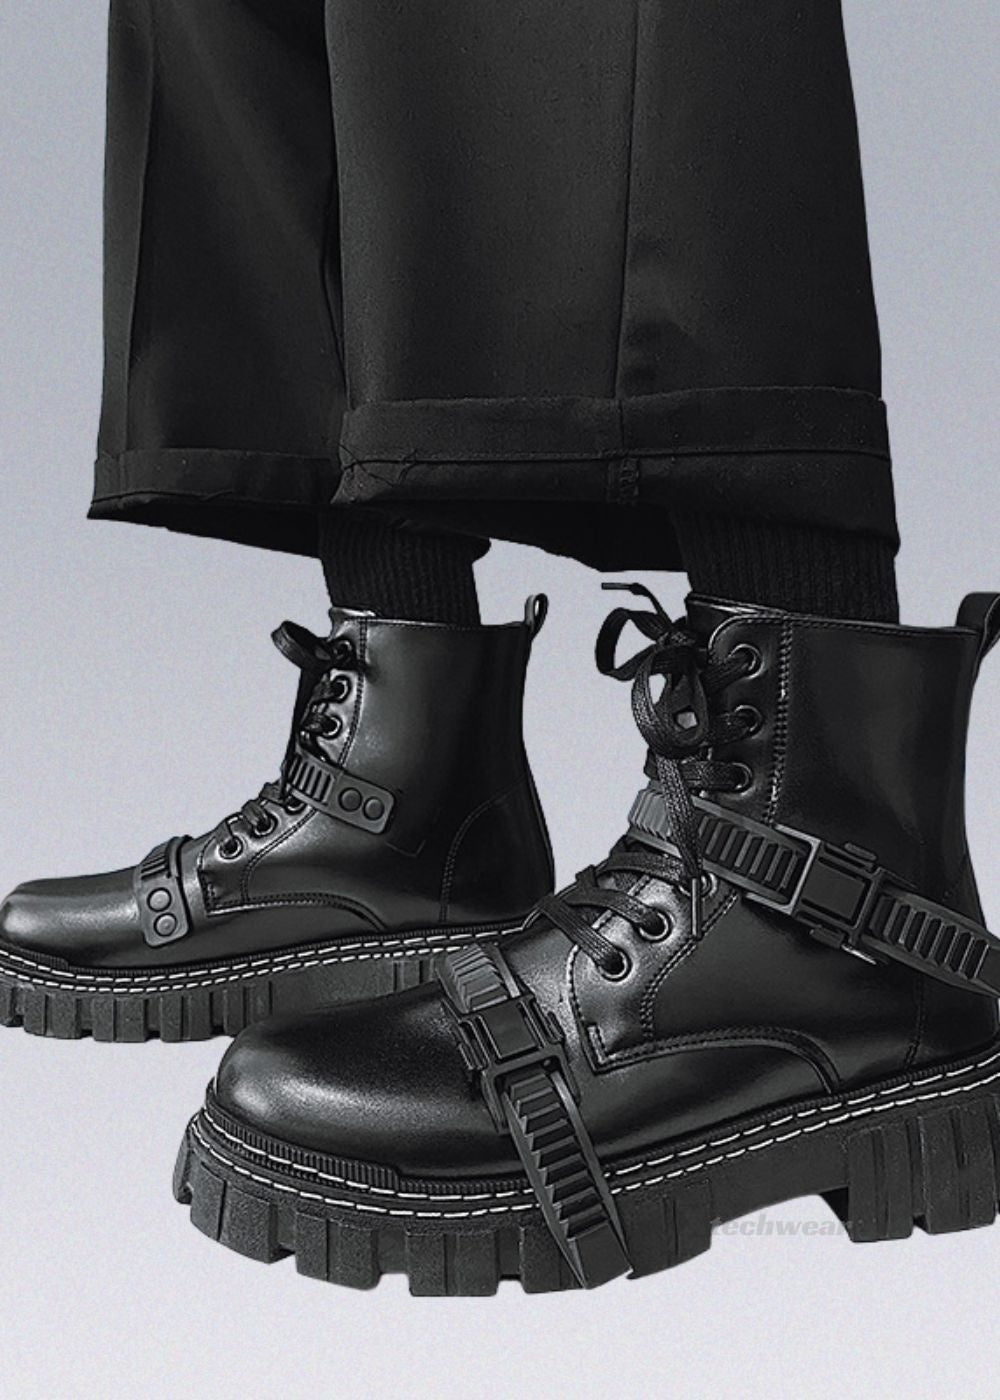 Techwear Dark Boots for Men - Shop Darkwear Shoes - X